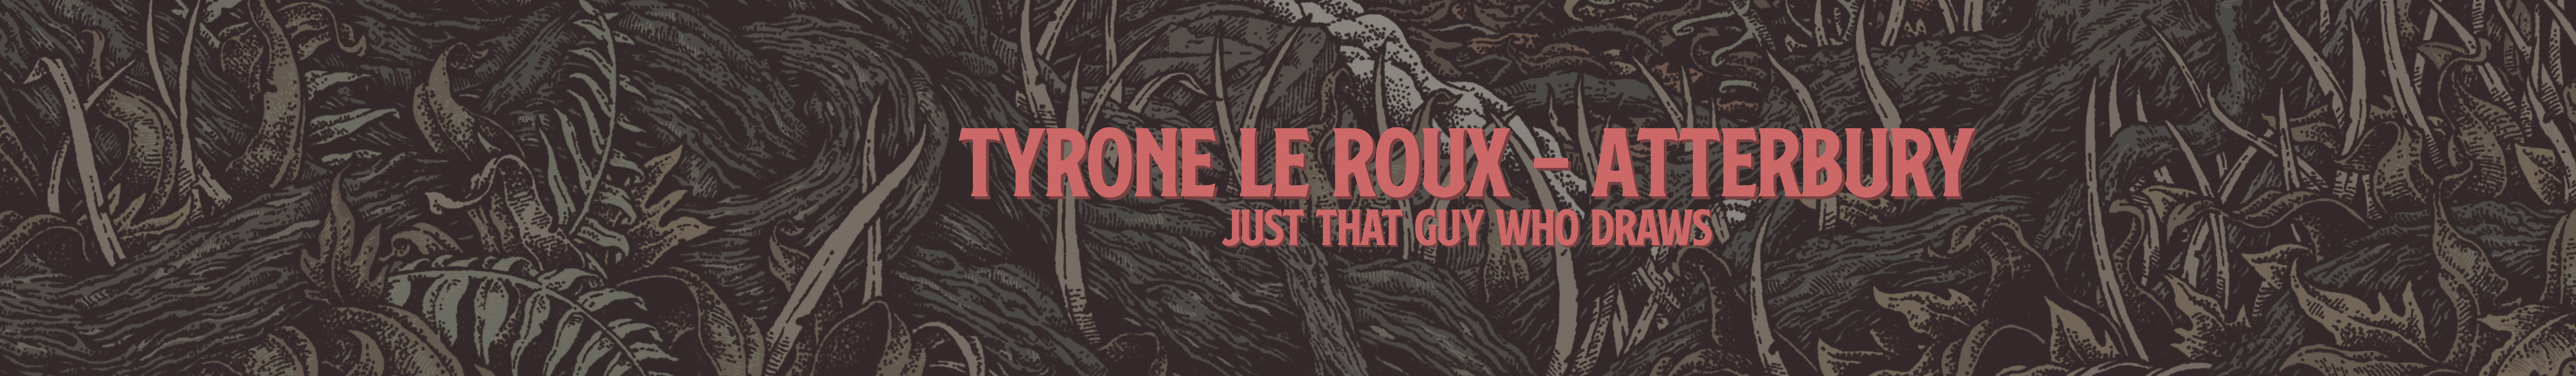 Banner de perfil de Tyrone Le Roux - Atterbury